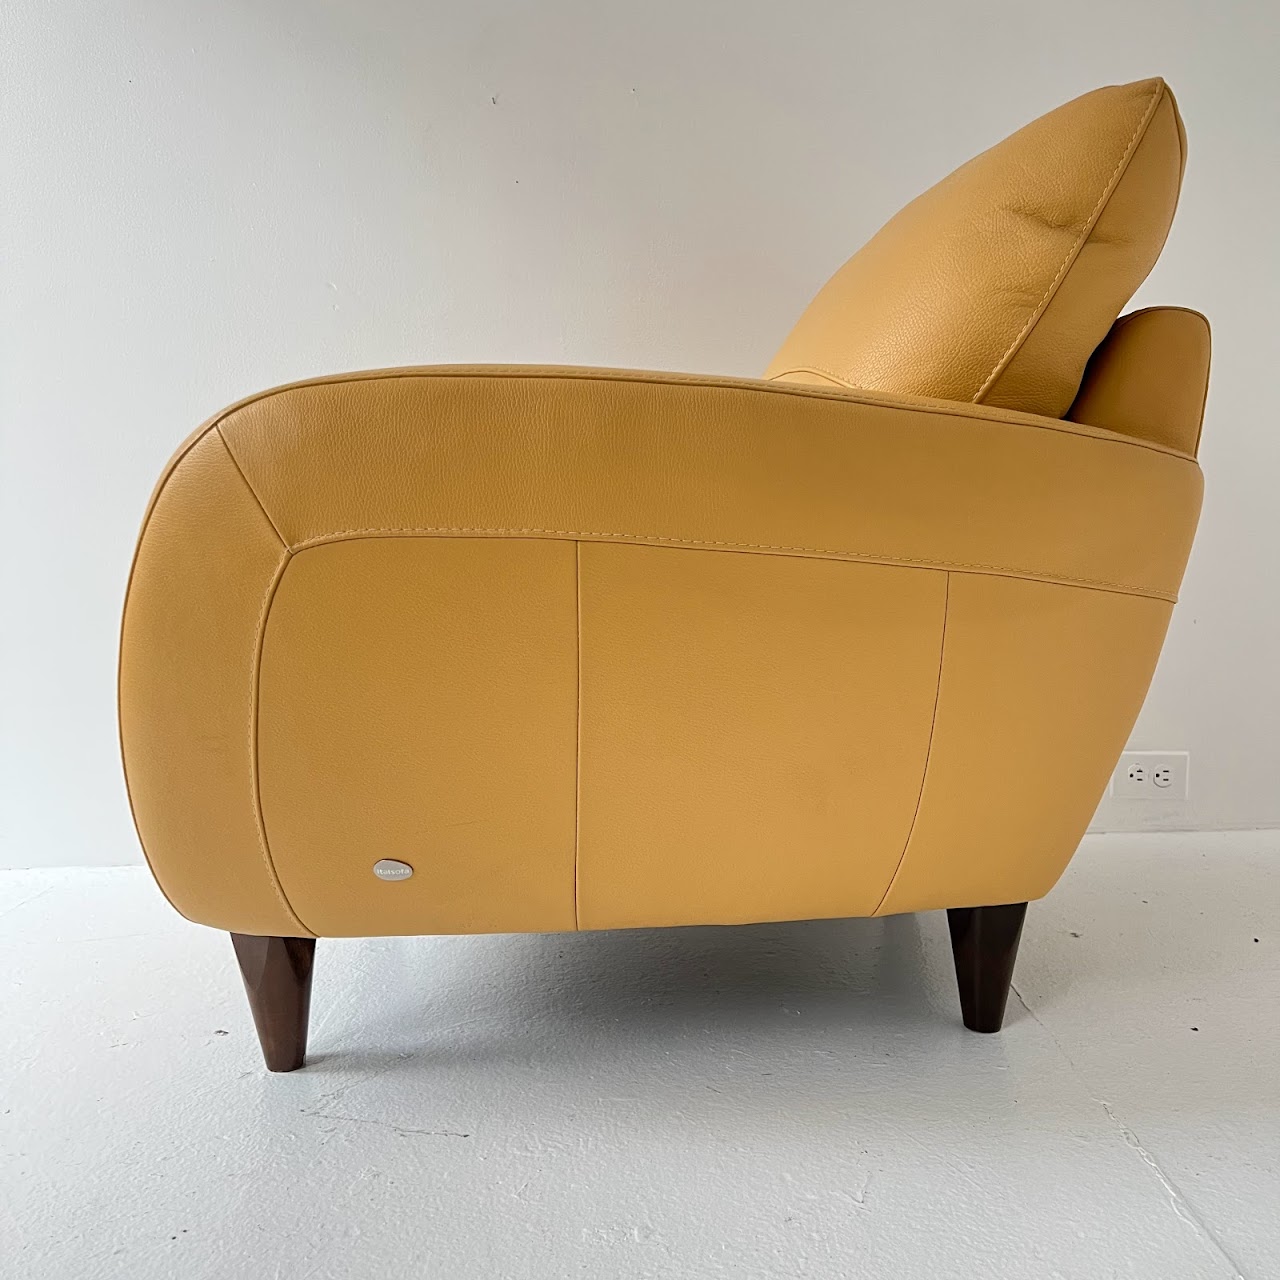 Italsofa Leather Club Chair